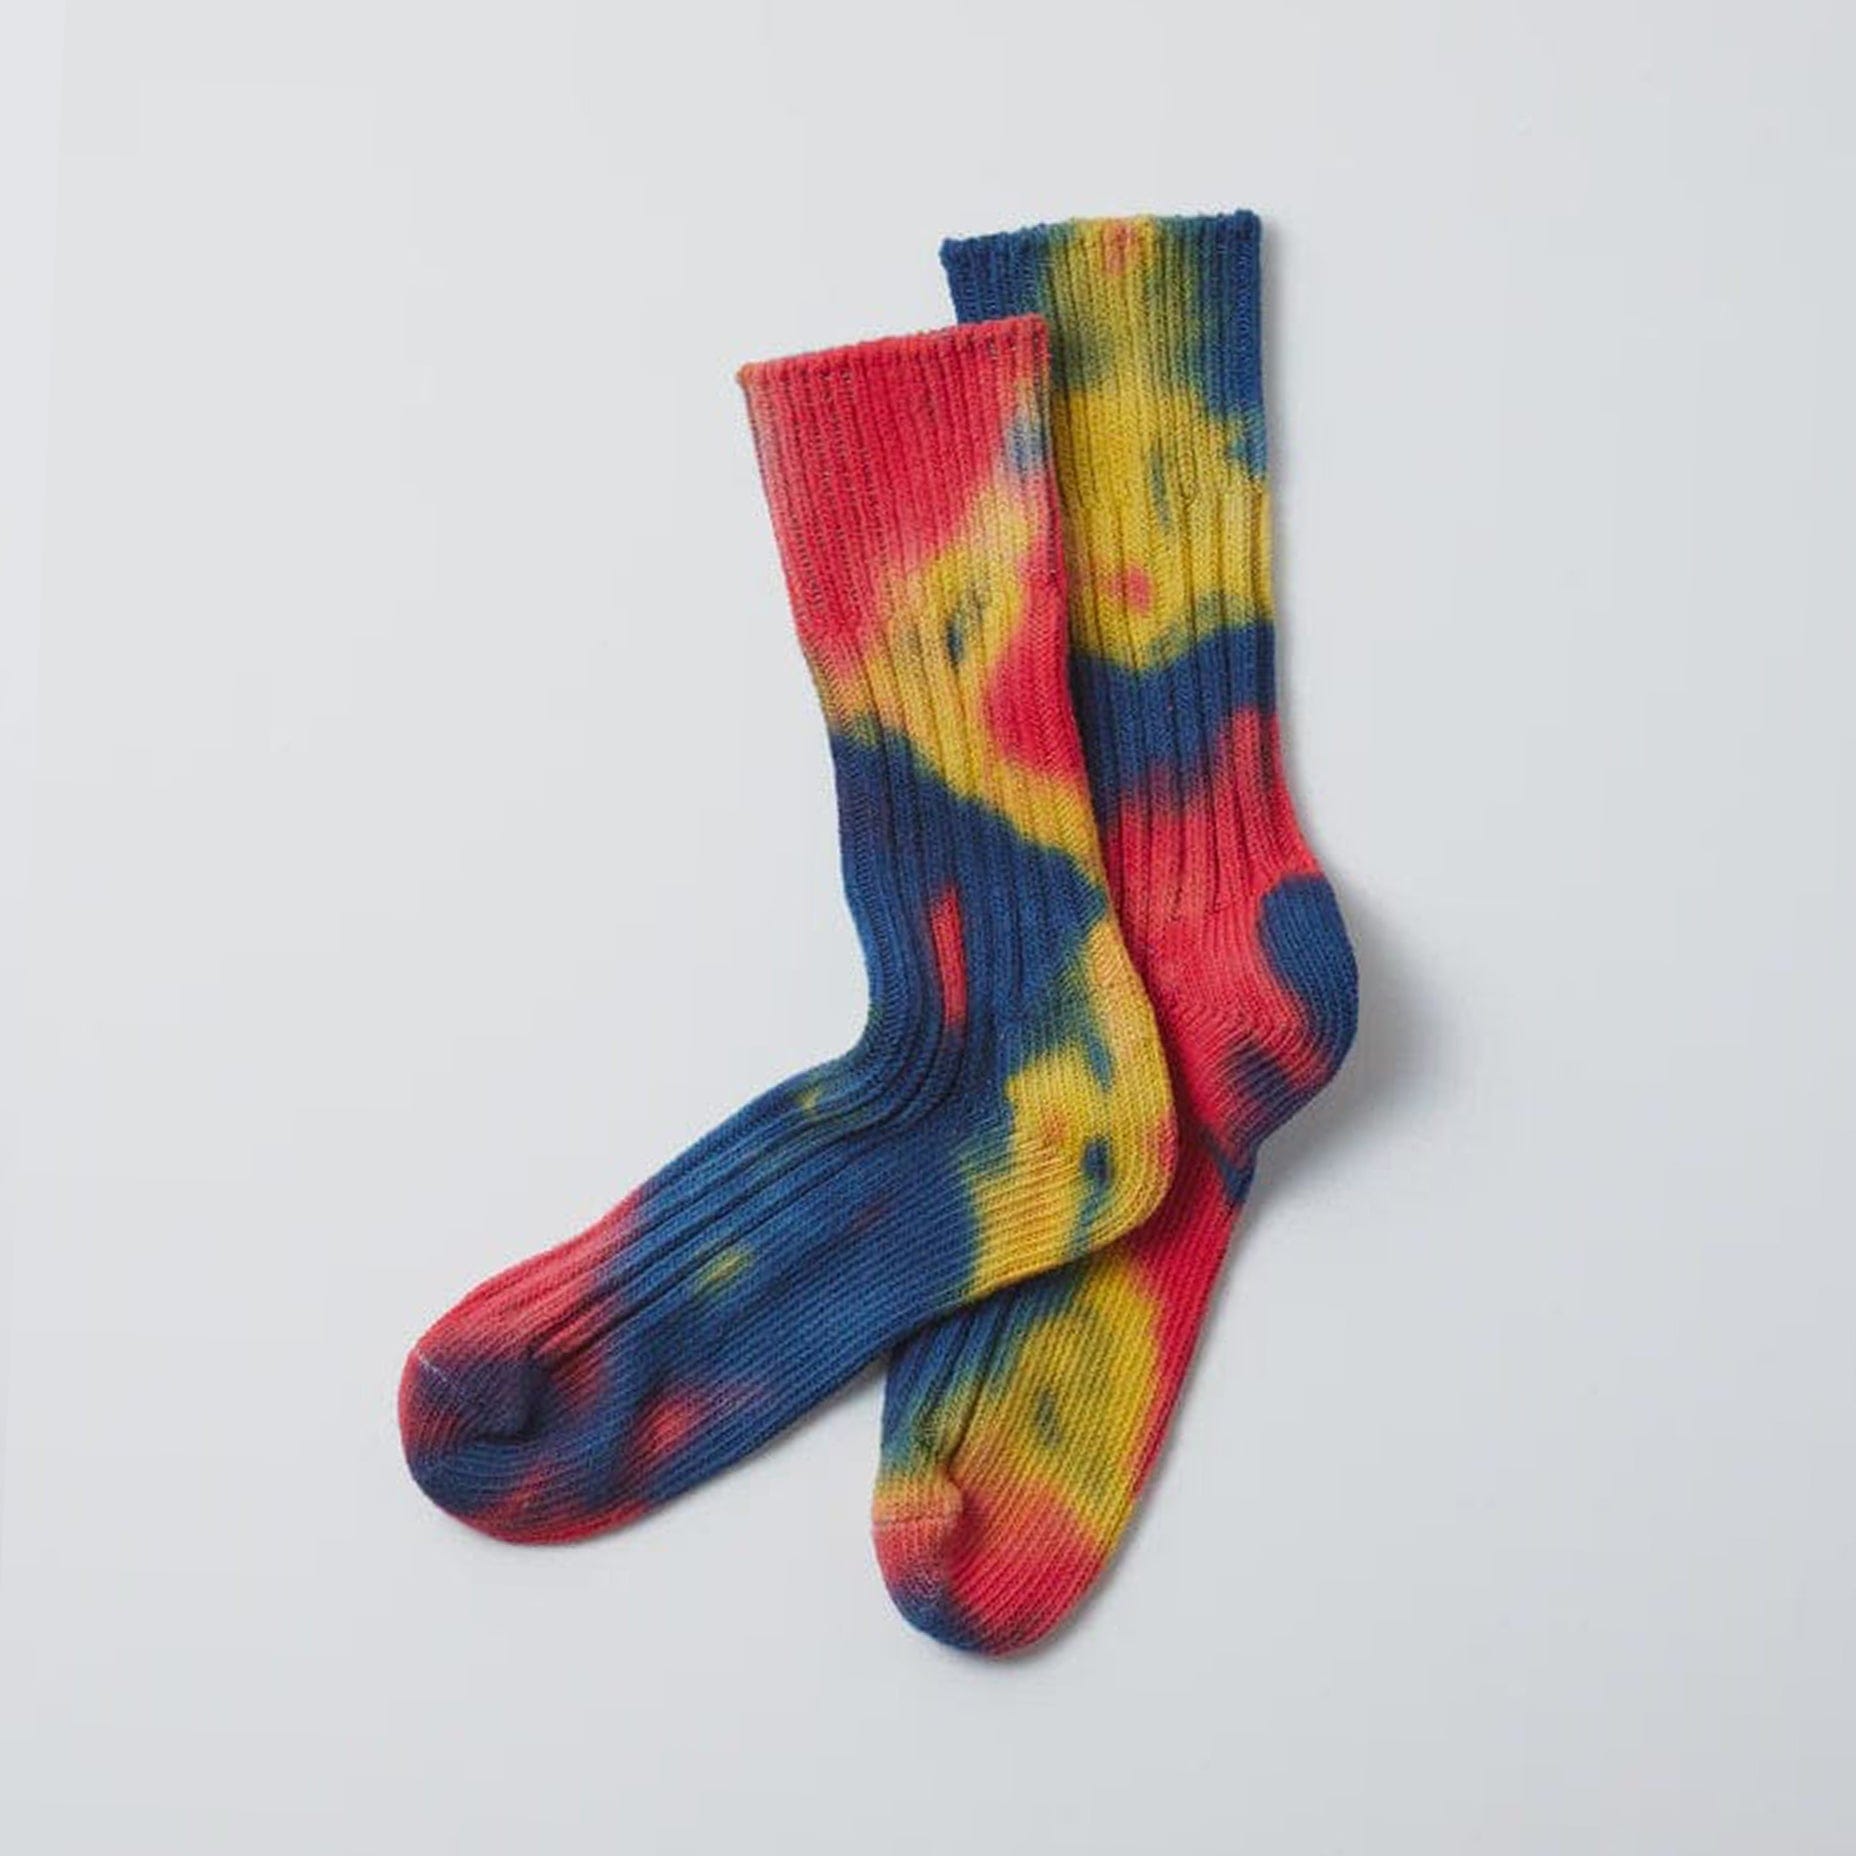 RoToTo Tie-Dye Formal Crew Socks Red/Blue Socks  - ZIGZAG Footwear